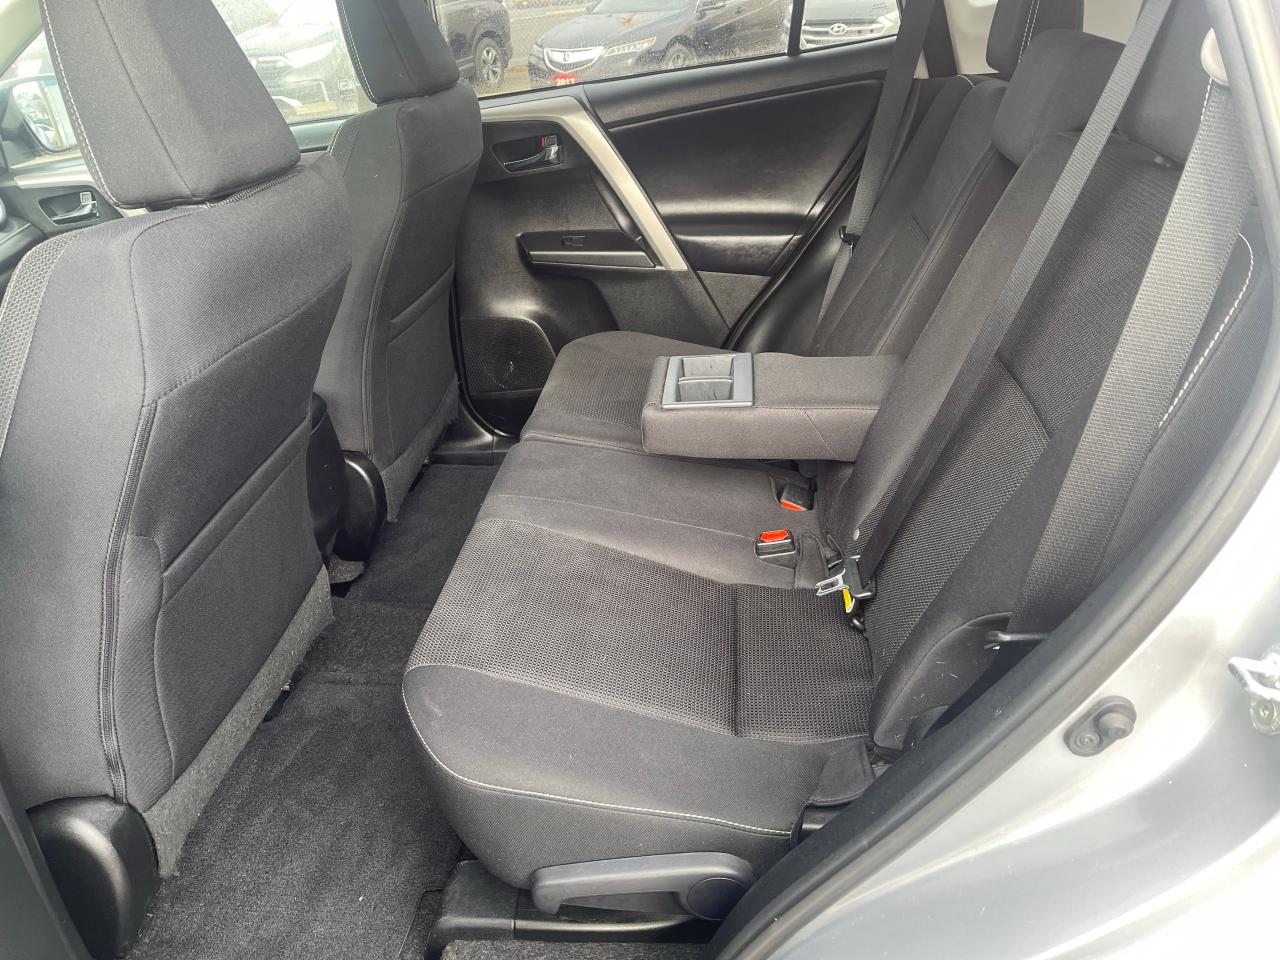 2016 Toyota RAV4 XLE, All Wheel Drive, Sunroof,Lane Departure Alert - Photo #9